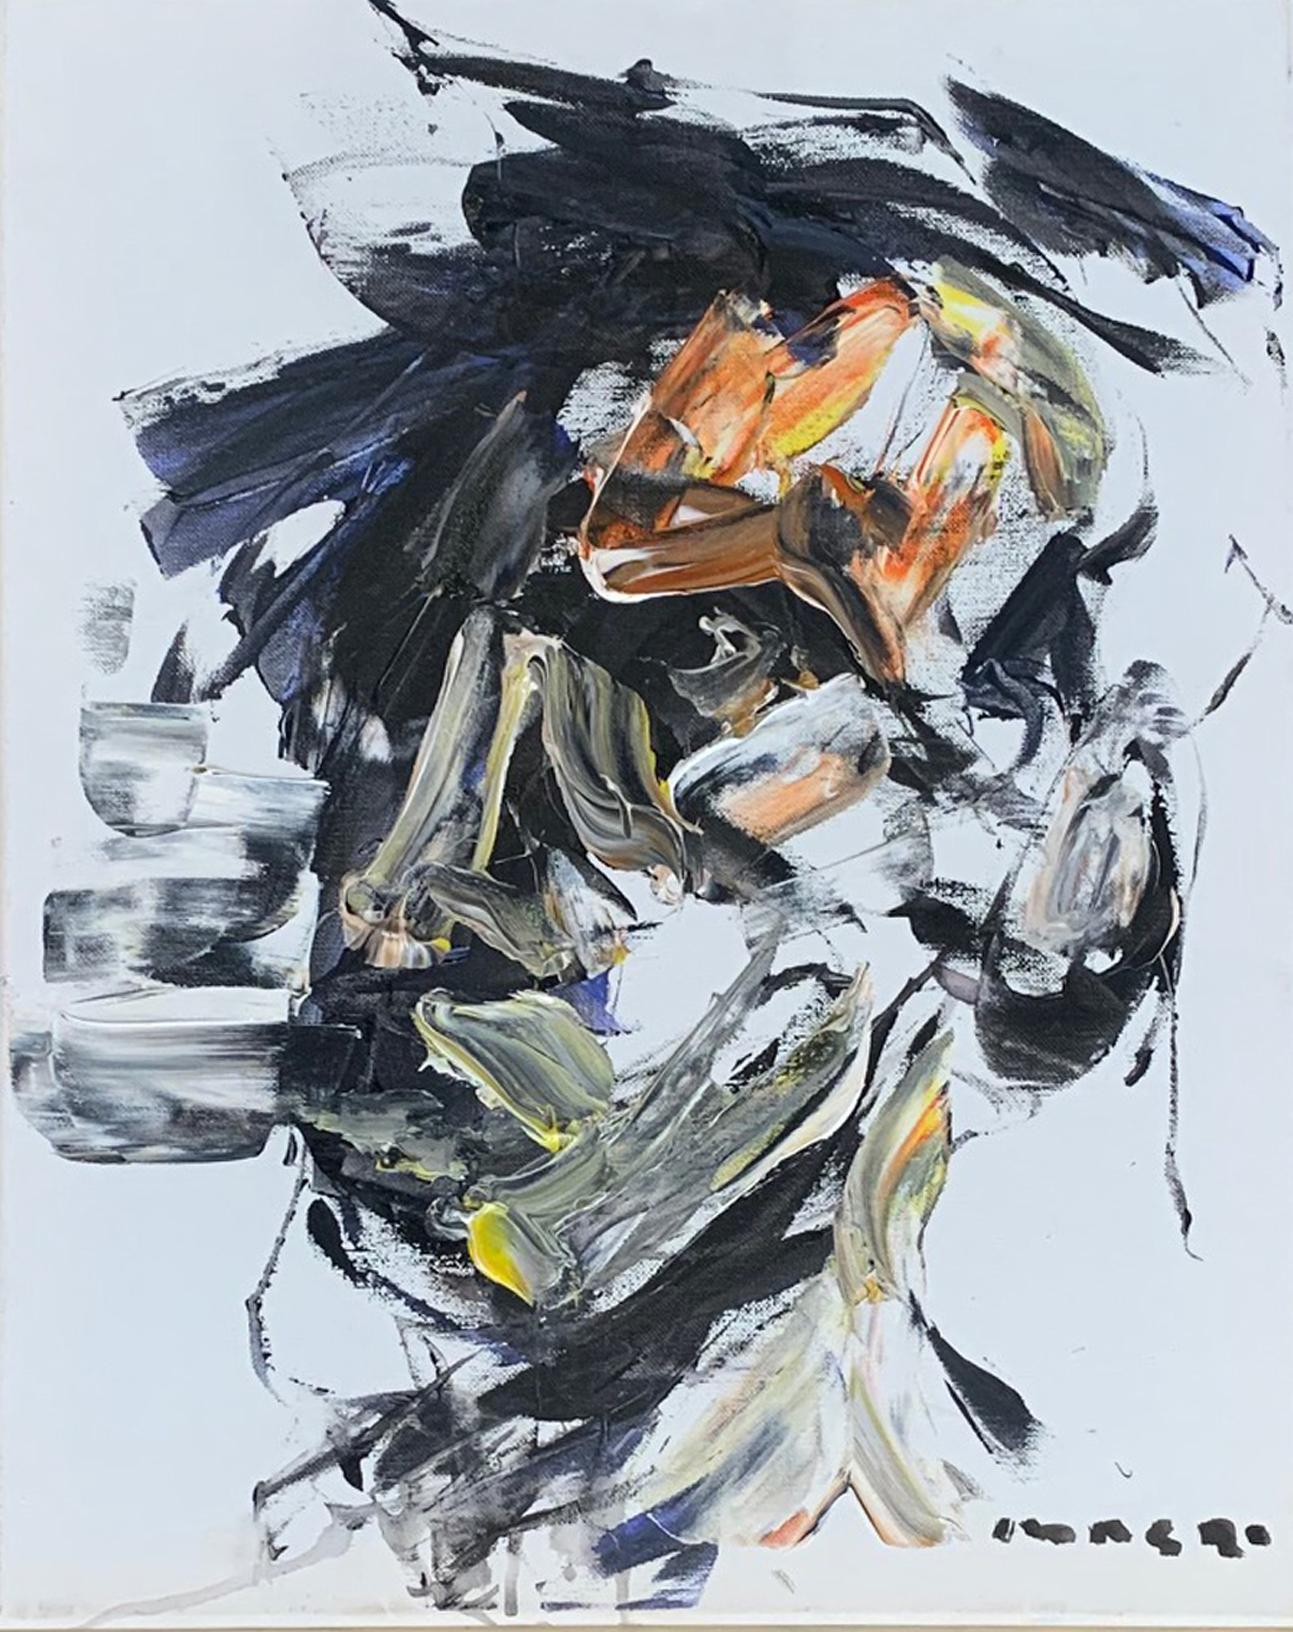 'Self Portrait in Black and Orange' oil on canvas by Masri